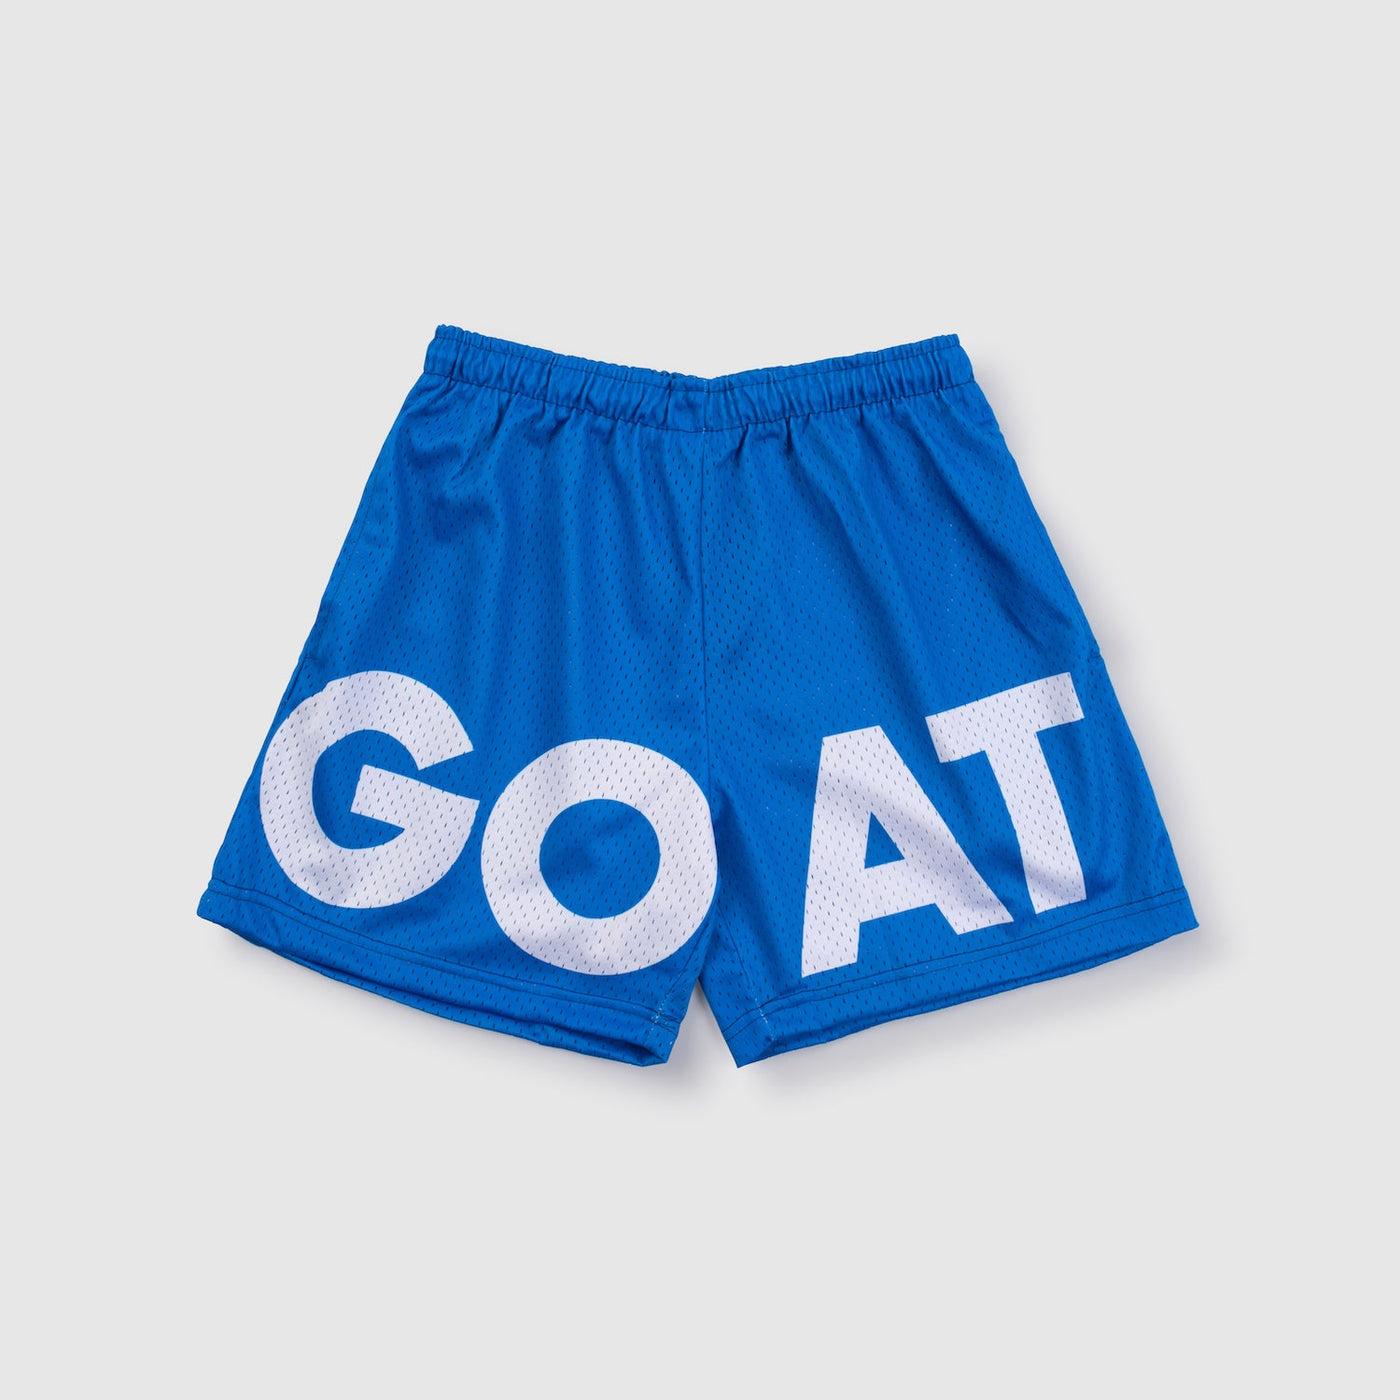 GOAT Mesh Logo Shorts (Blue/White)